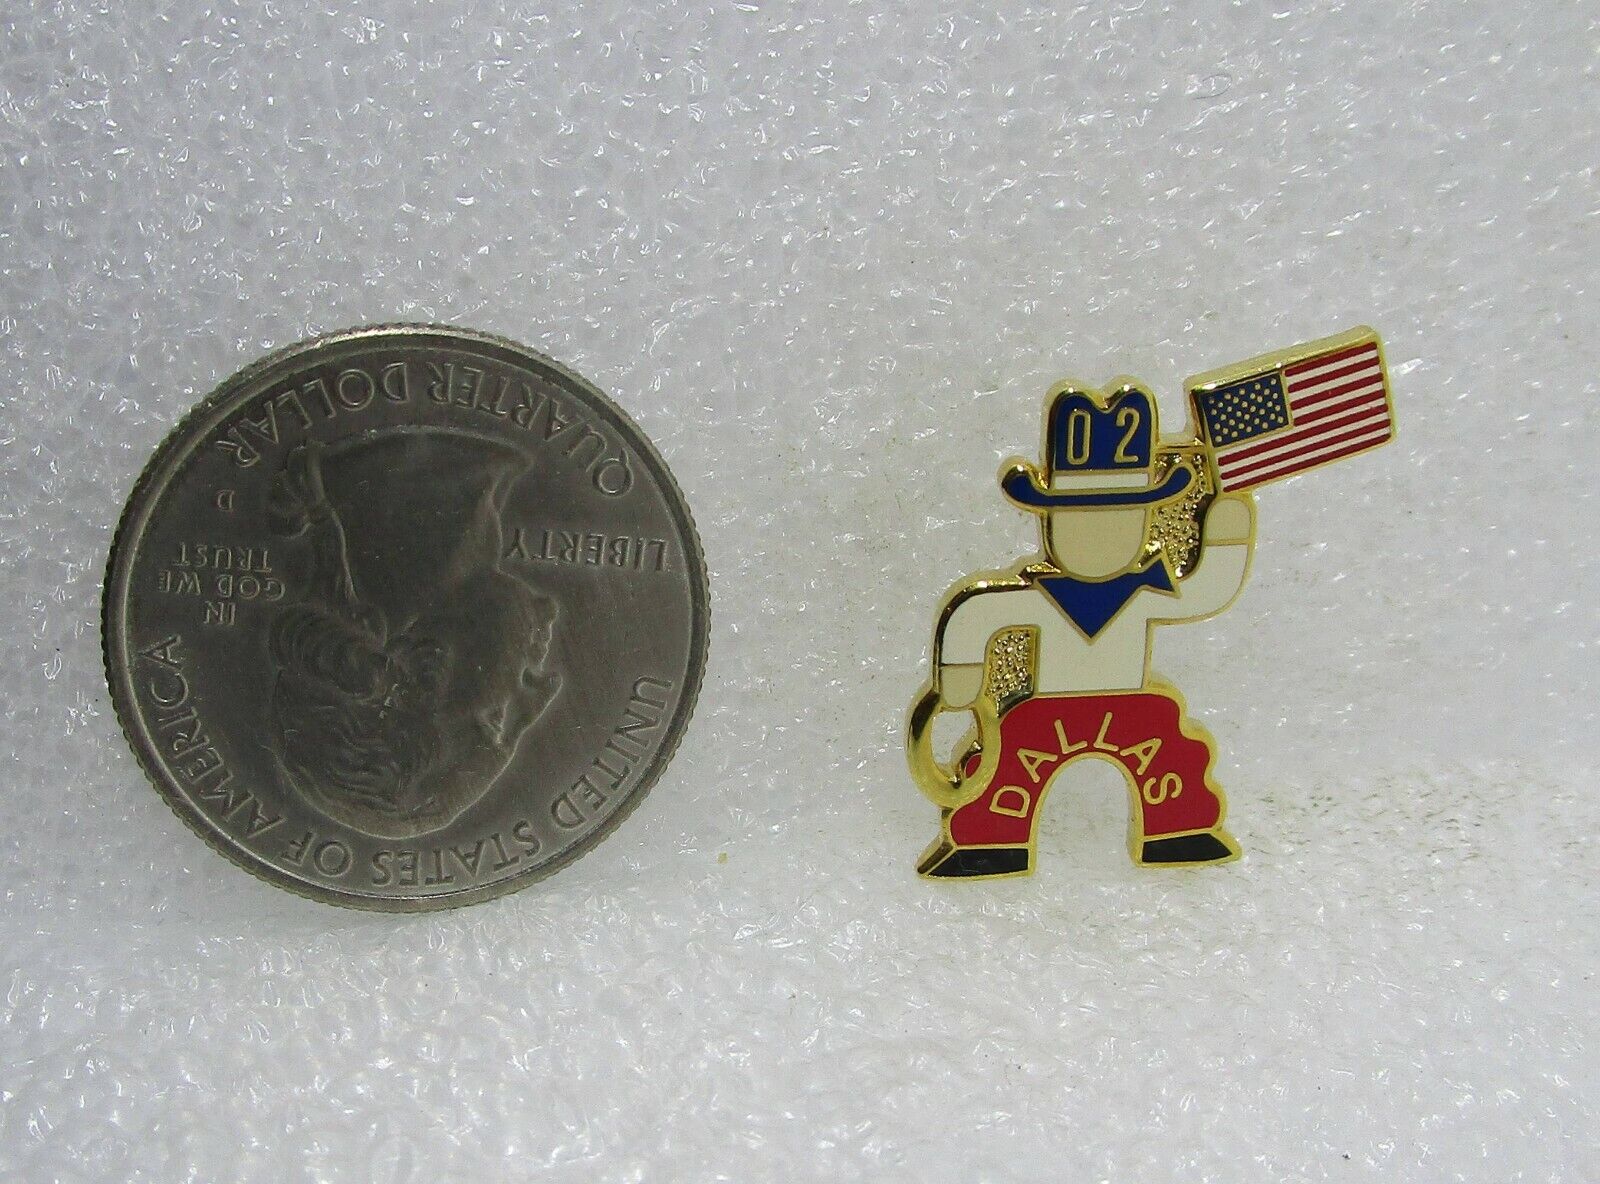 2002 Dallas Cowboy Holding United States Flag Travel Pin